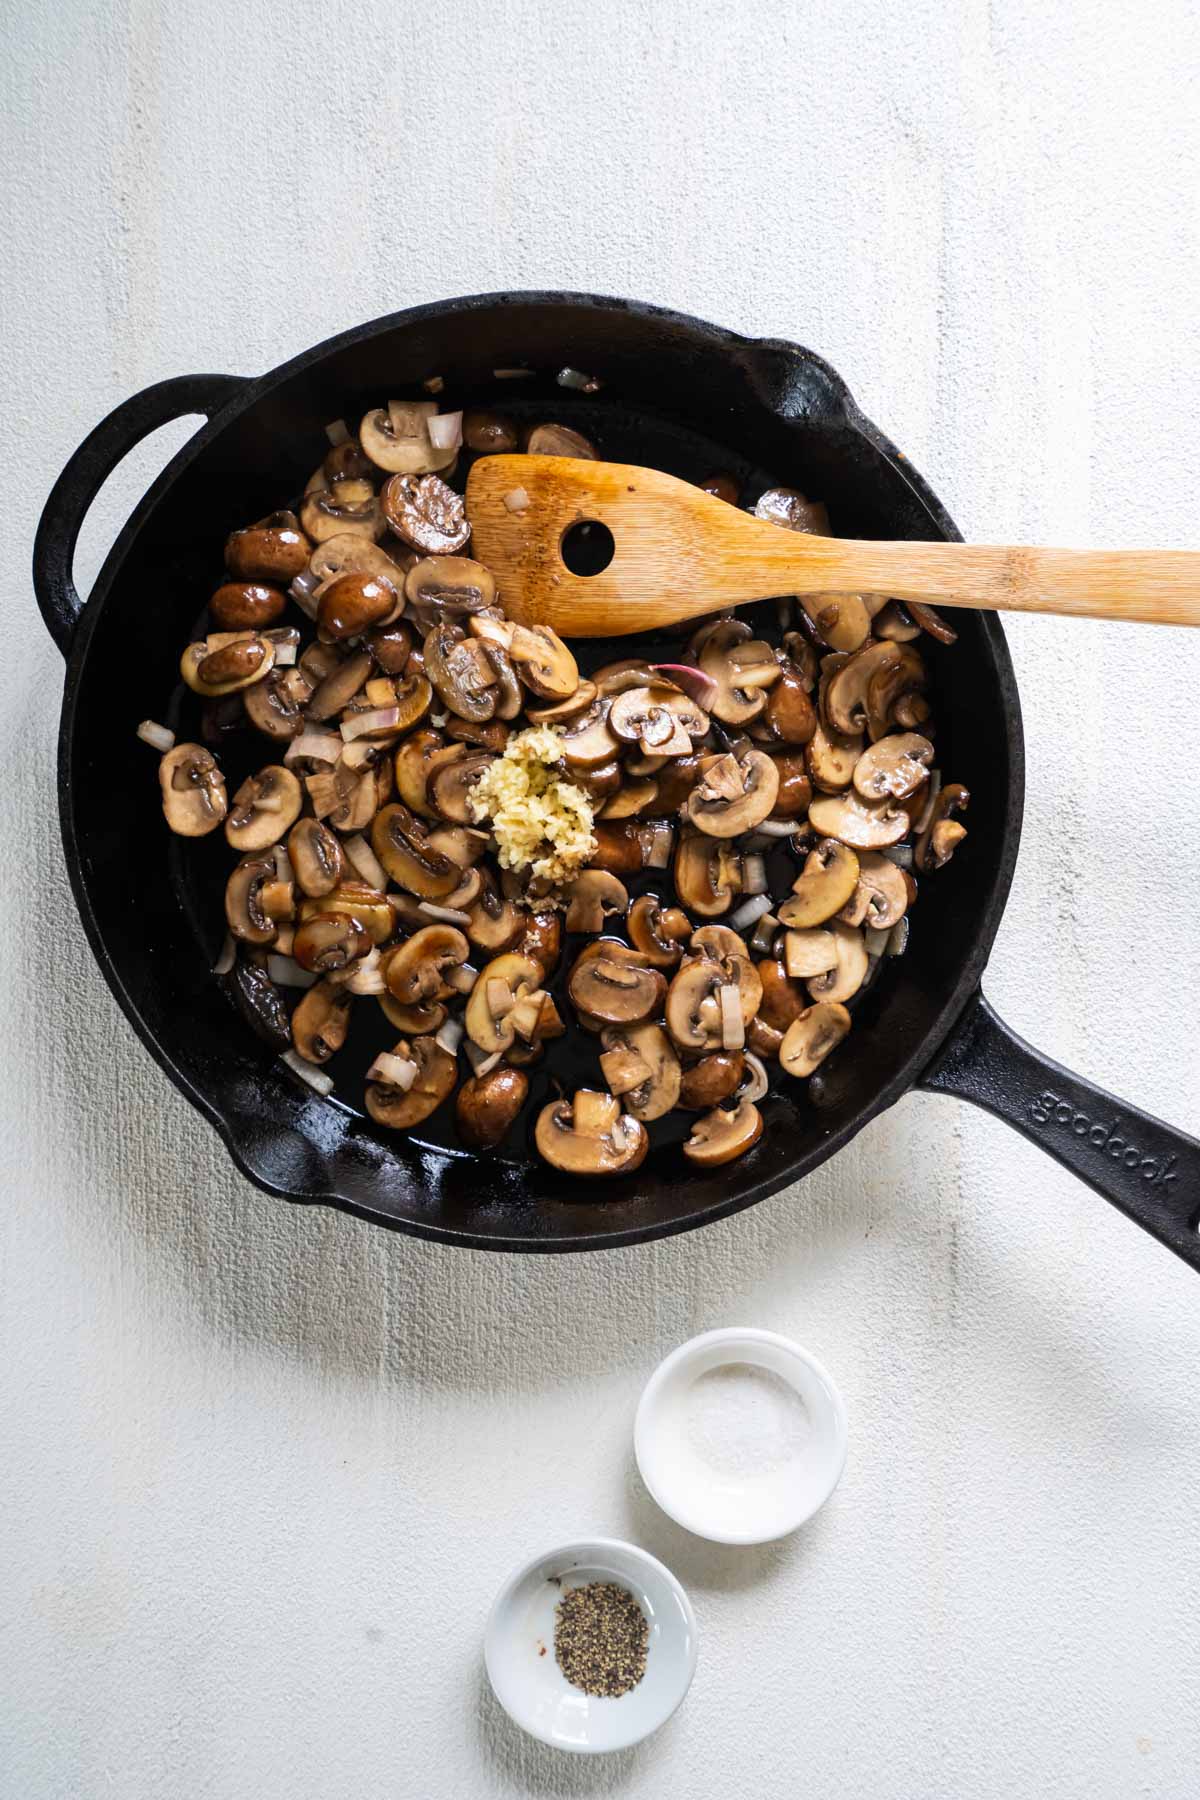 Minced garlic added to pan with sauteed mushrooms.